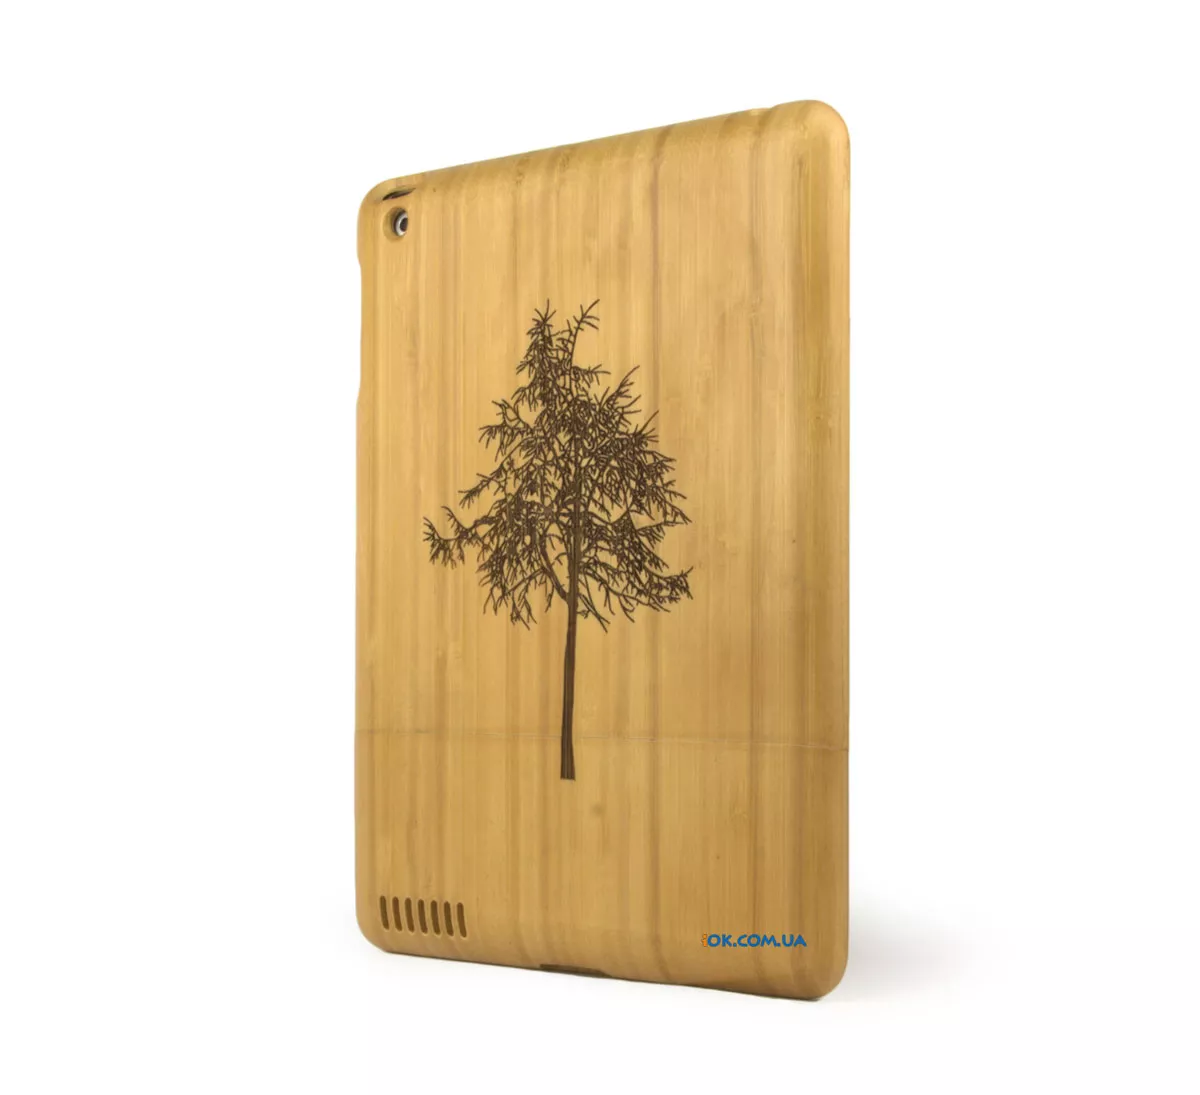 Деревяная накладка на iPad 2 / 3 / 4 с рисунком дерева